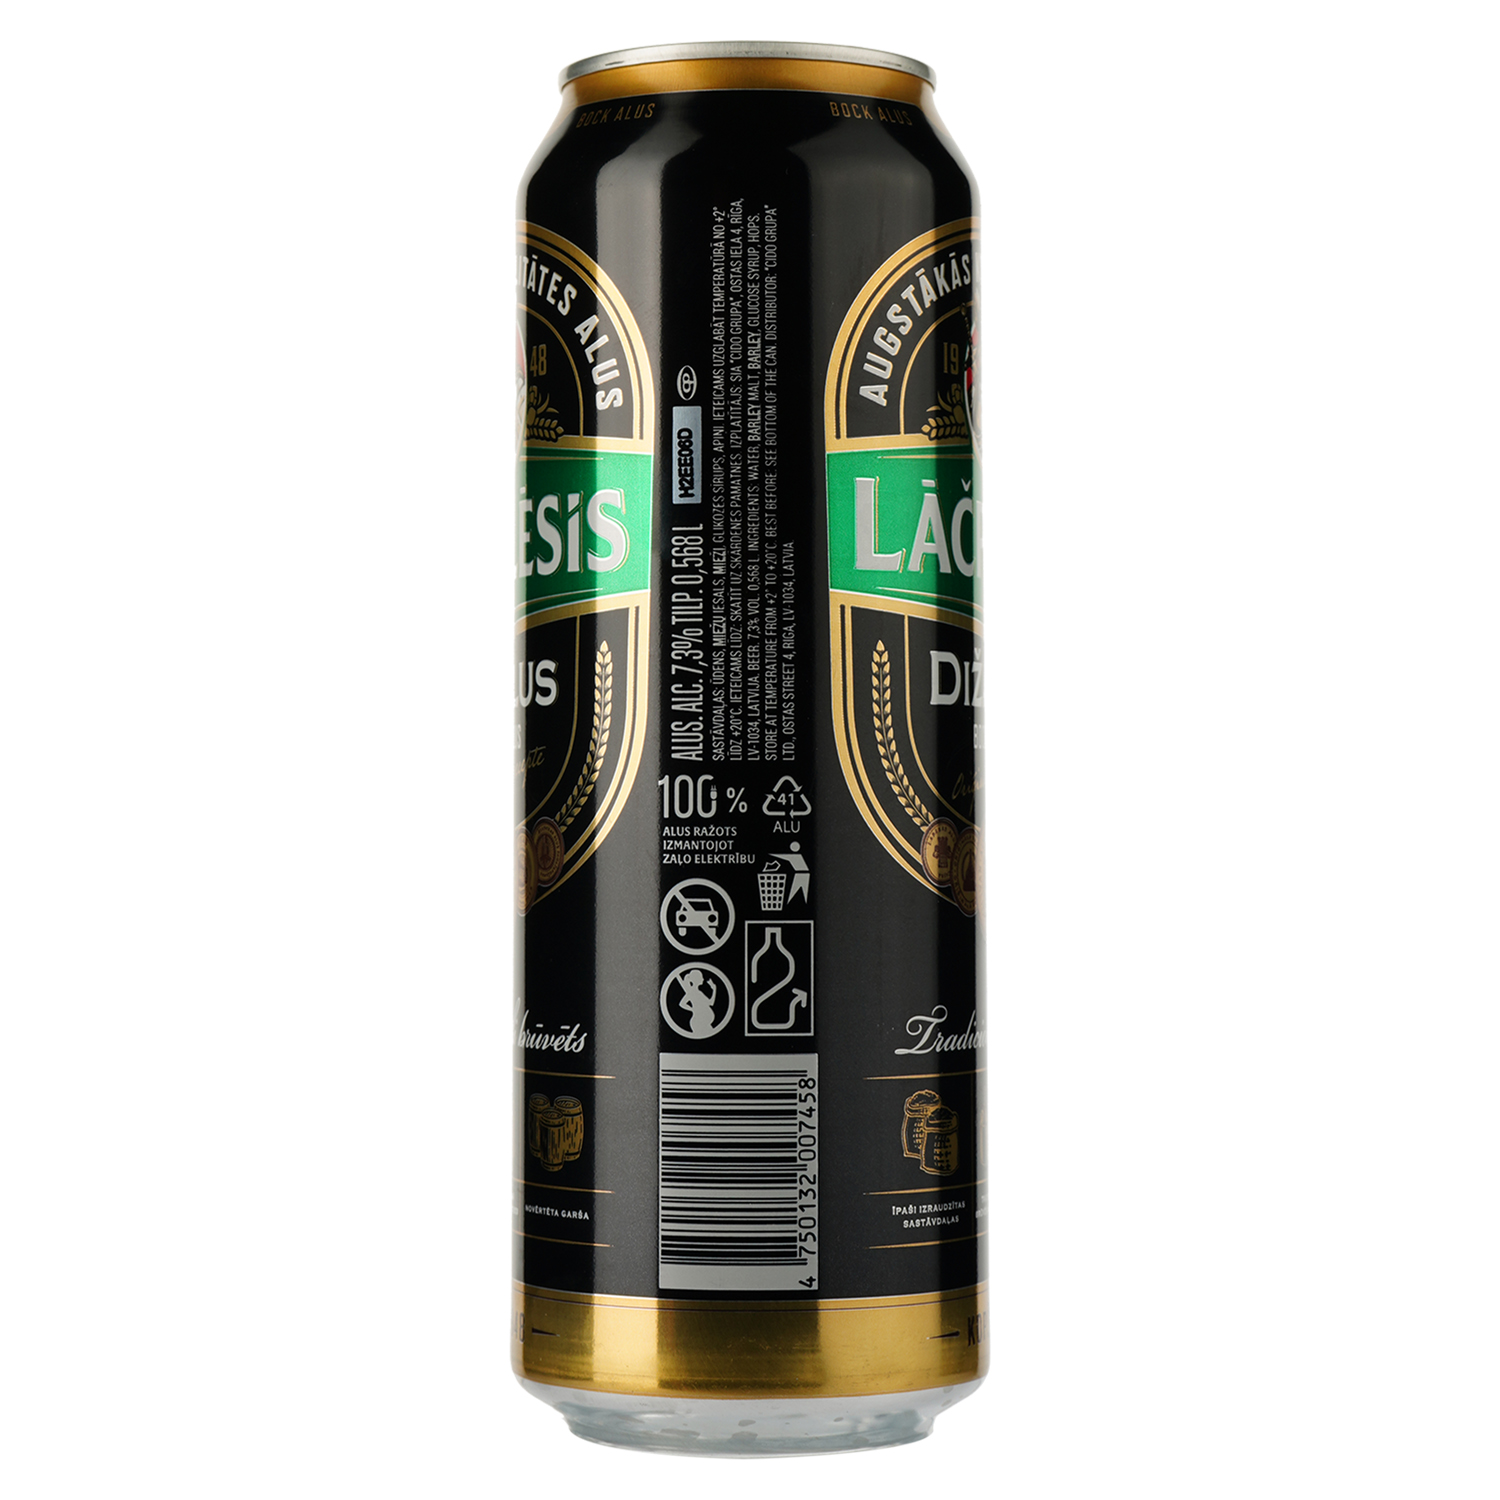 Пиво Lacplesis Dizalus, светлое, фильтрованное, 7,3%, ж/б, 0,568 л (907889) - фото 2